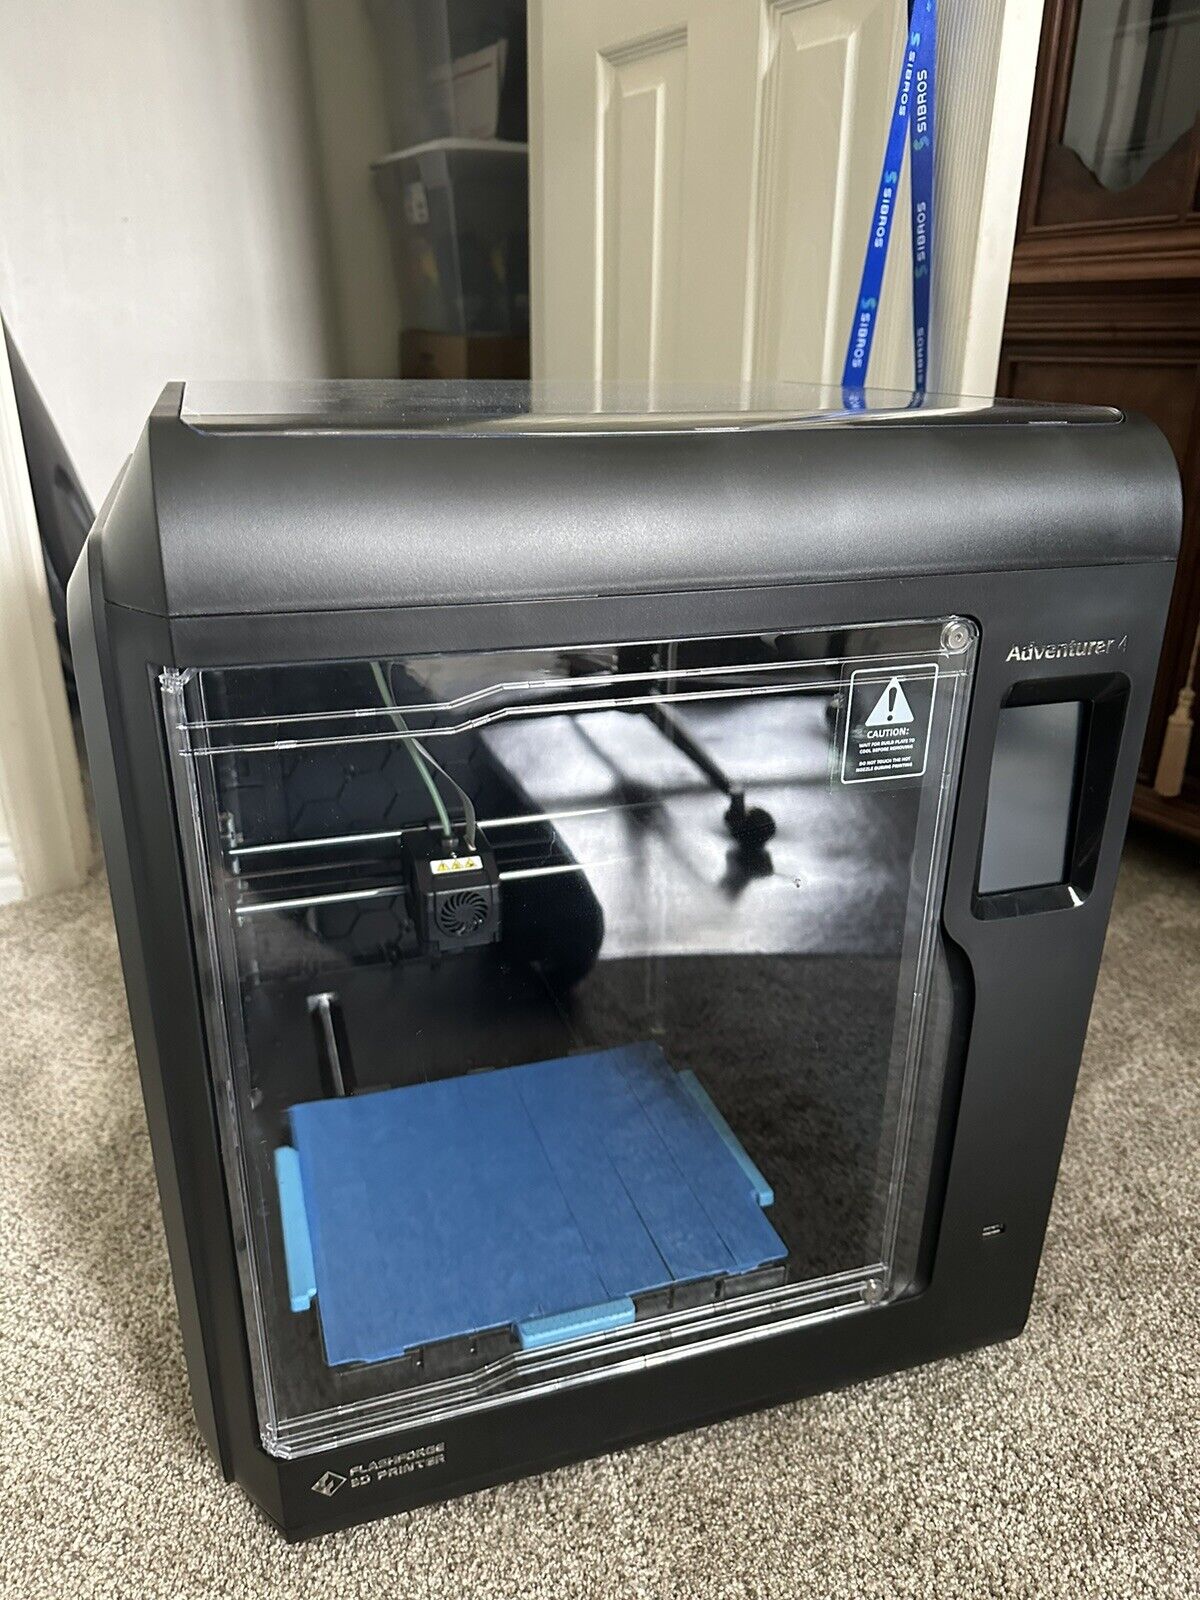 FLASHFORGE 3D Printer Adventurer 4 Pro High Speed Printing Smart Auto Leveling